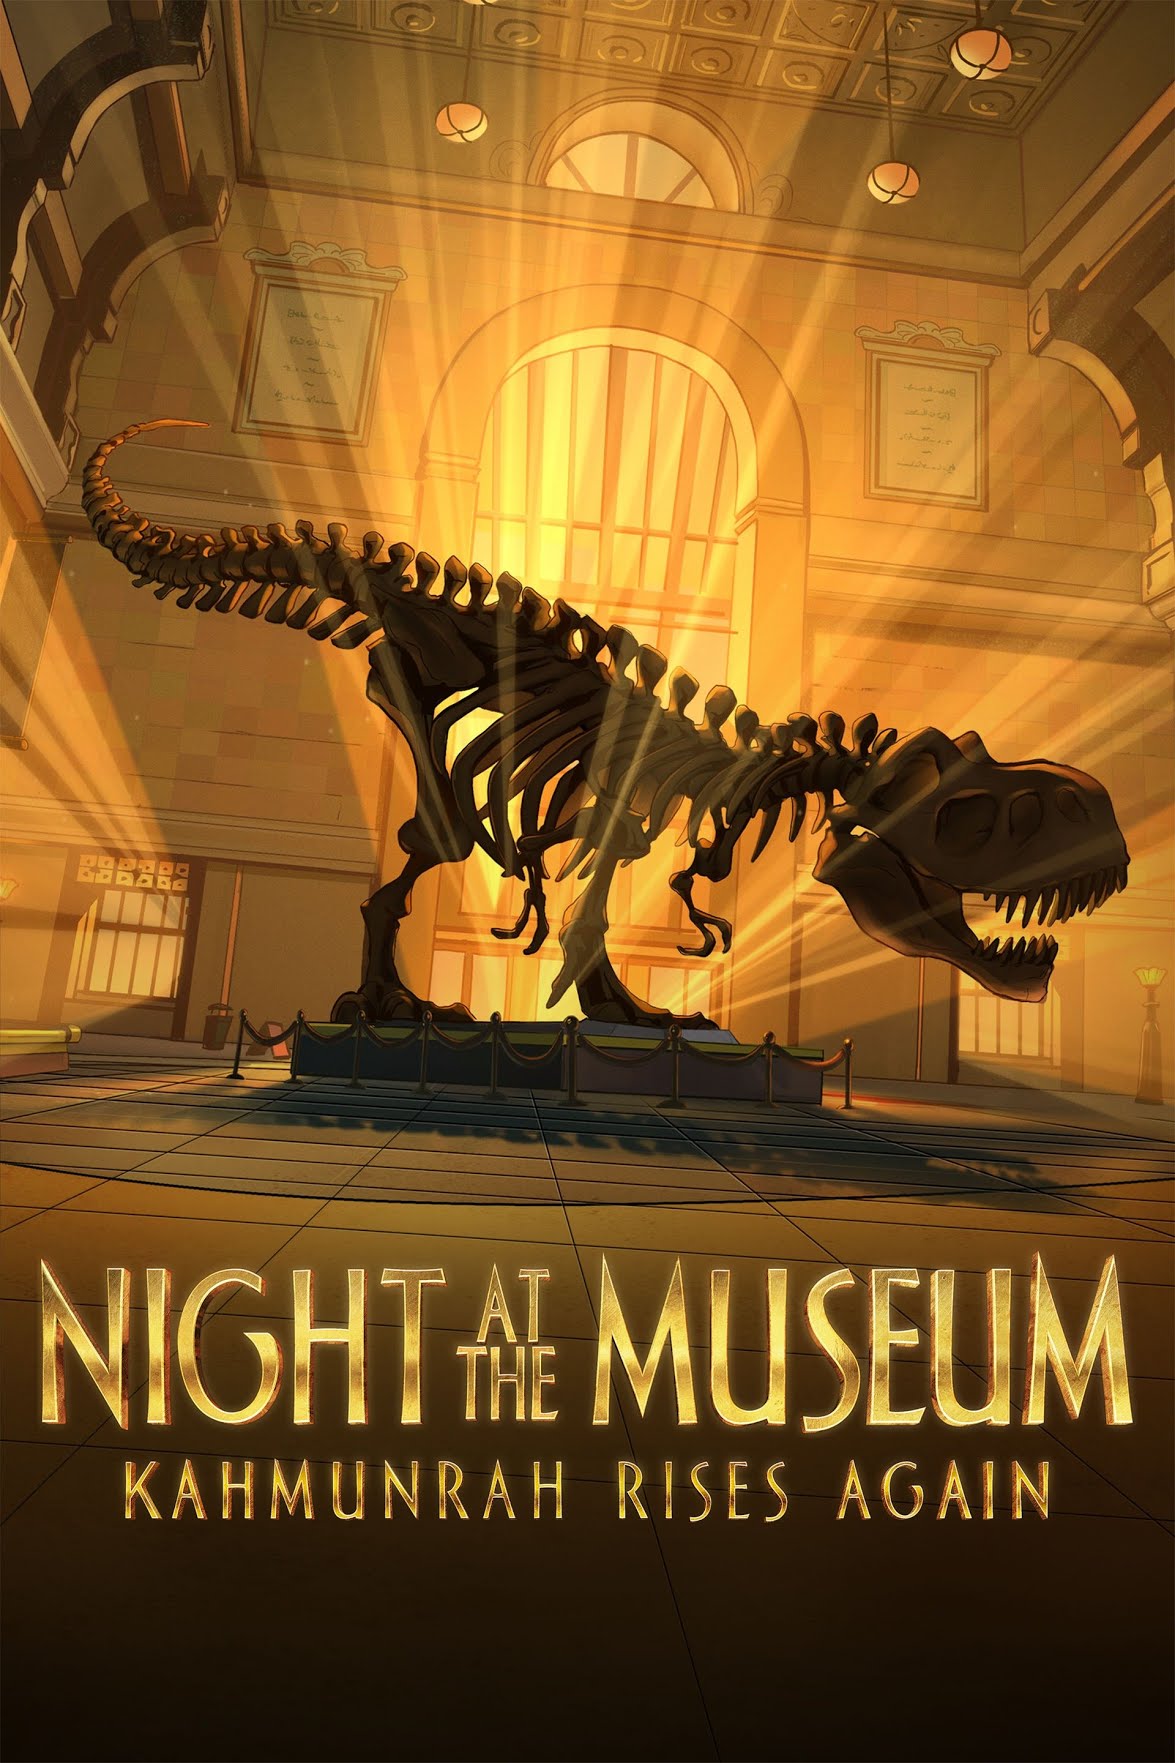 [MINI Super-HQ] Night at the Museum: Kahmunrah Rises Again (2022) ไนท์ แอท เดอะ มิวเซียม: คาห์มุนราห์คืนชีพ [1080p] [DISNEY+] [พากย์ไทย 5.1 + เสียงอังกฤษ 5.1] [บรีร